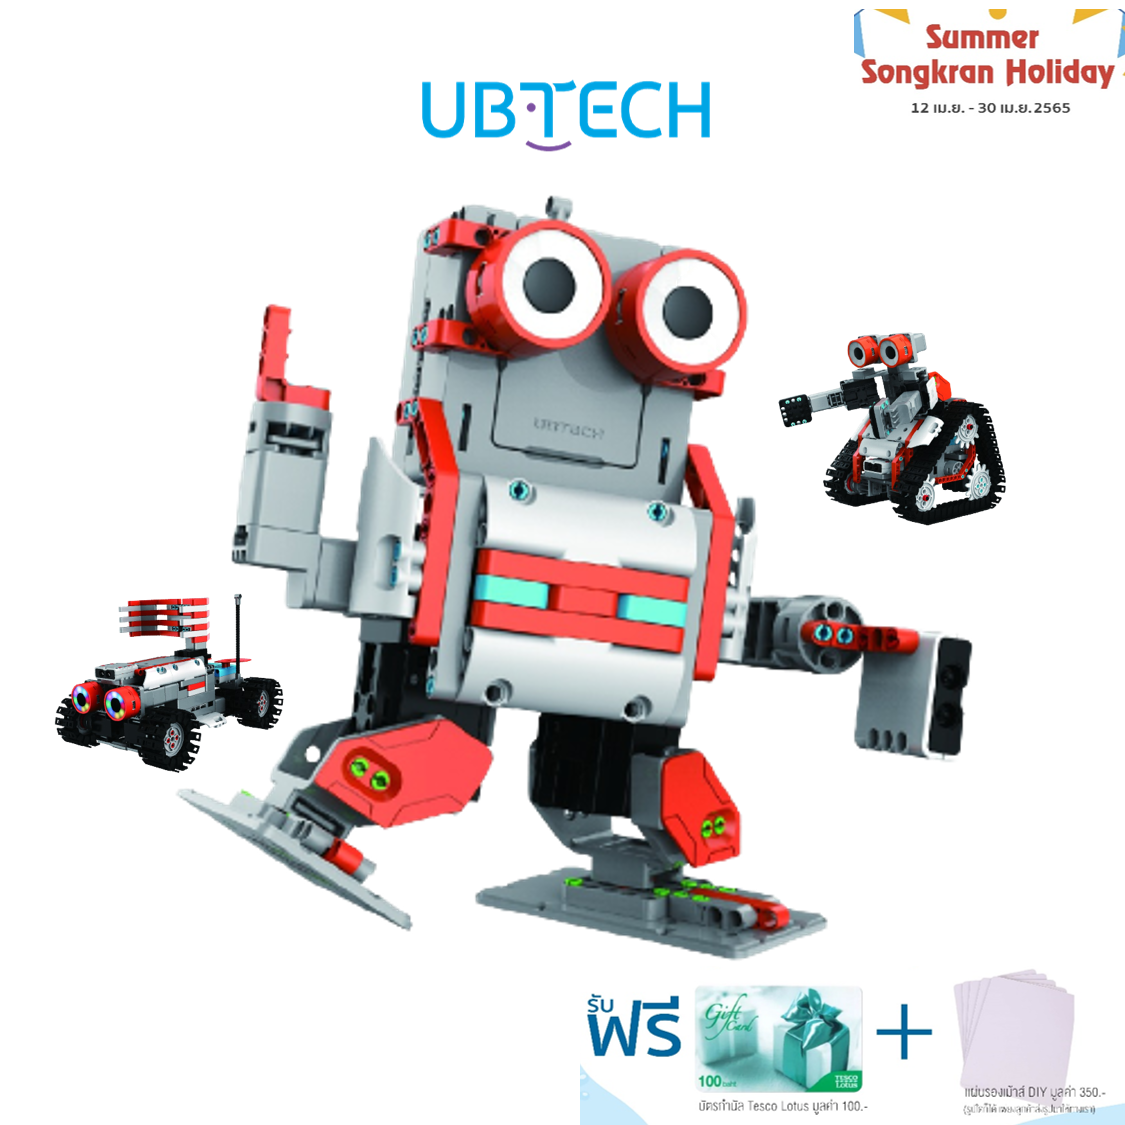 UBTECH หุ่นยนต์อัจฉริยะ JIMU ASTROBOT เพื่อพัฒนาการเรียนรู้และฝึกทักษะการเขียนโปรแกรม (หุ่นยนต์ หุ่นยนต์ประกอบ หุ่นยนต์เพื่อการเรียนรู้)